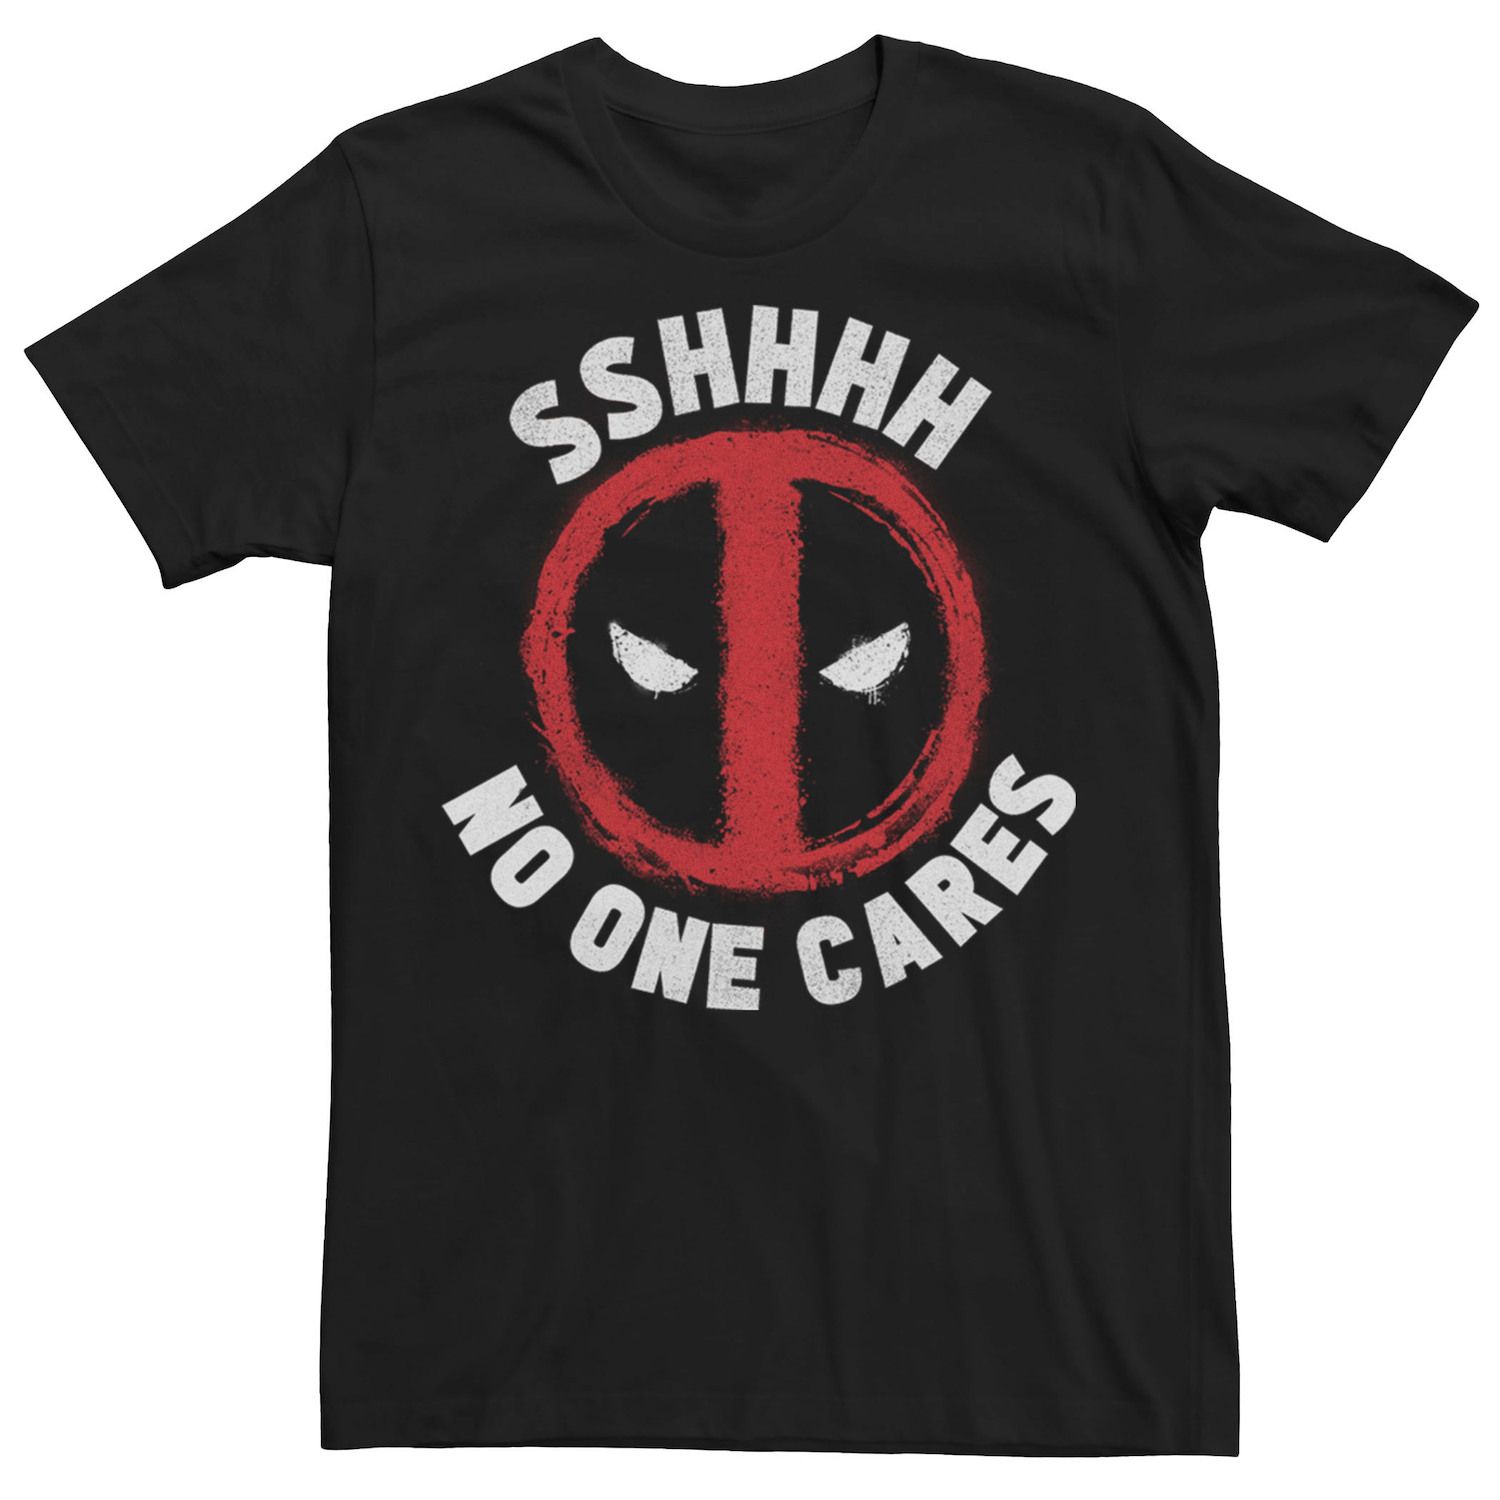 Мужская футболка с логотипом Deadpool SSHHHH No One Cares Marvel